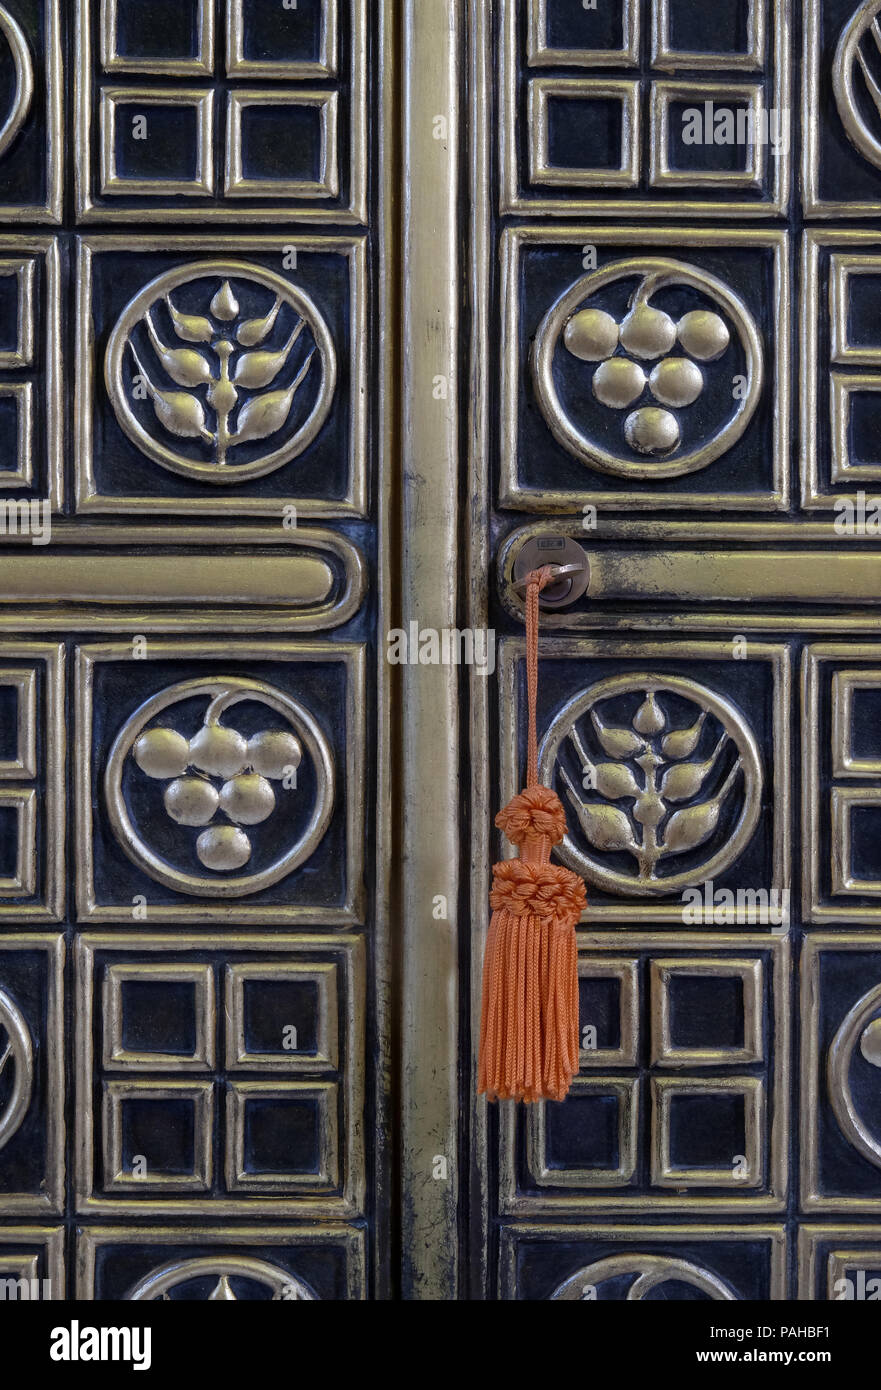 Door of tabernacle on the main altar in Saint Blaise church in Zagreb, Croatia Stock Photo